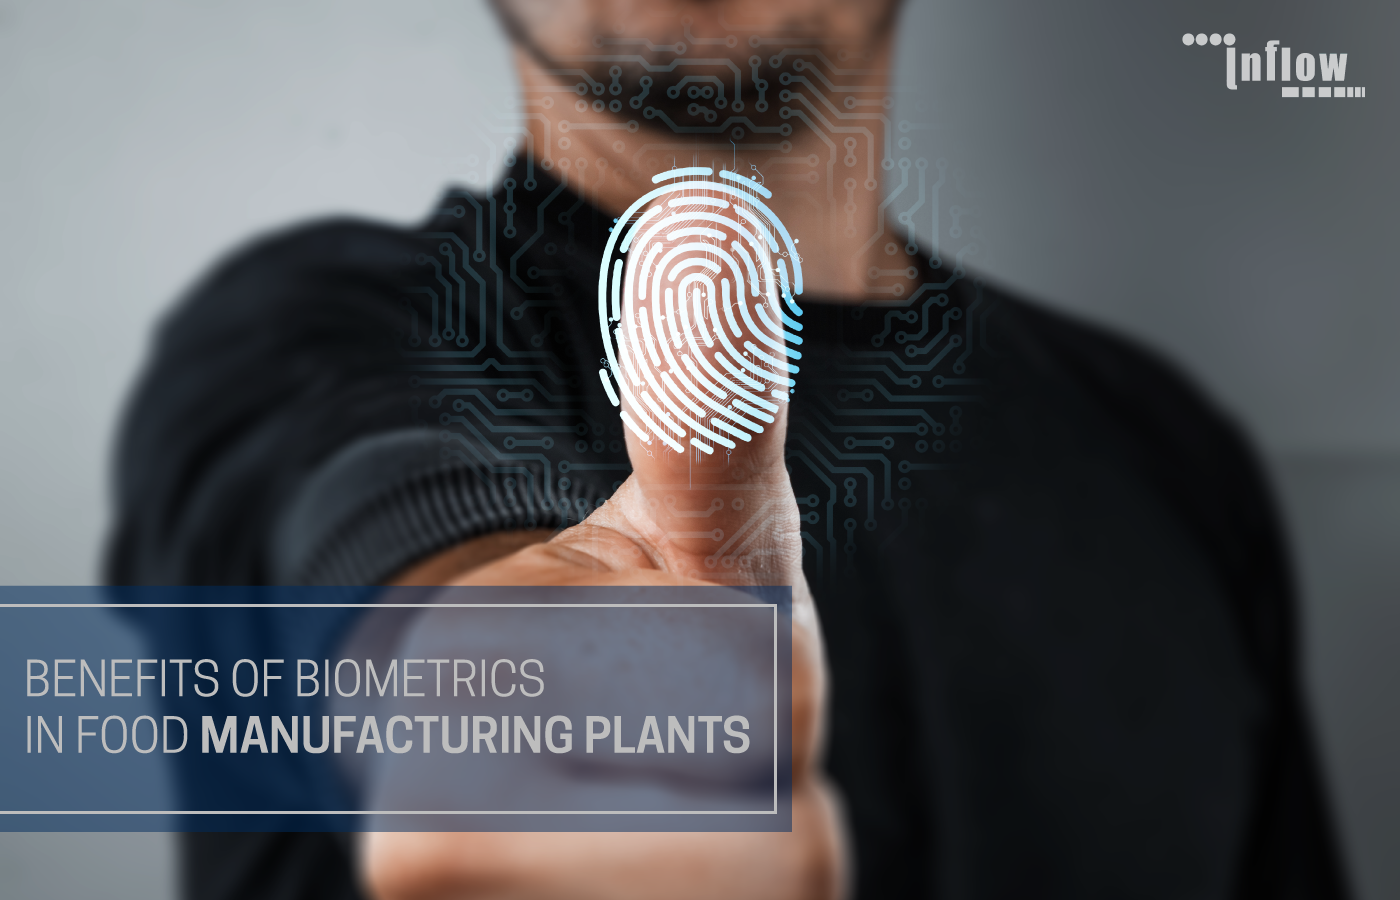 biometrics in food manufacturing plants